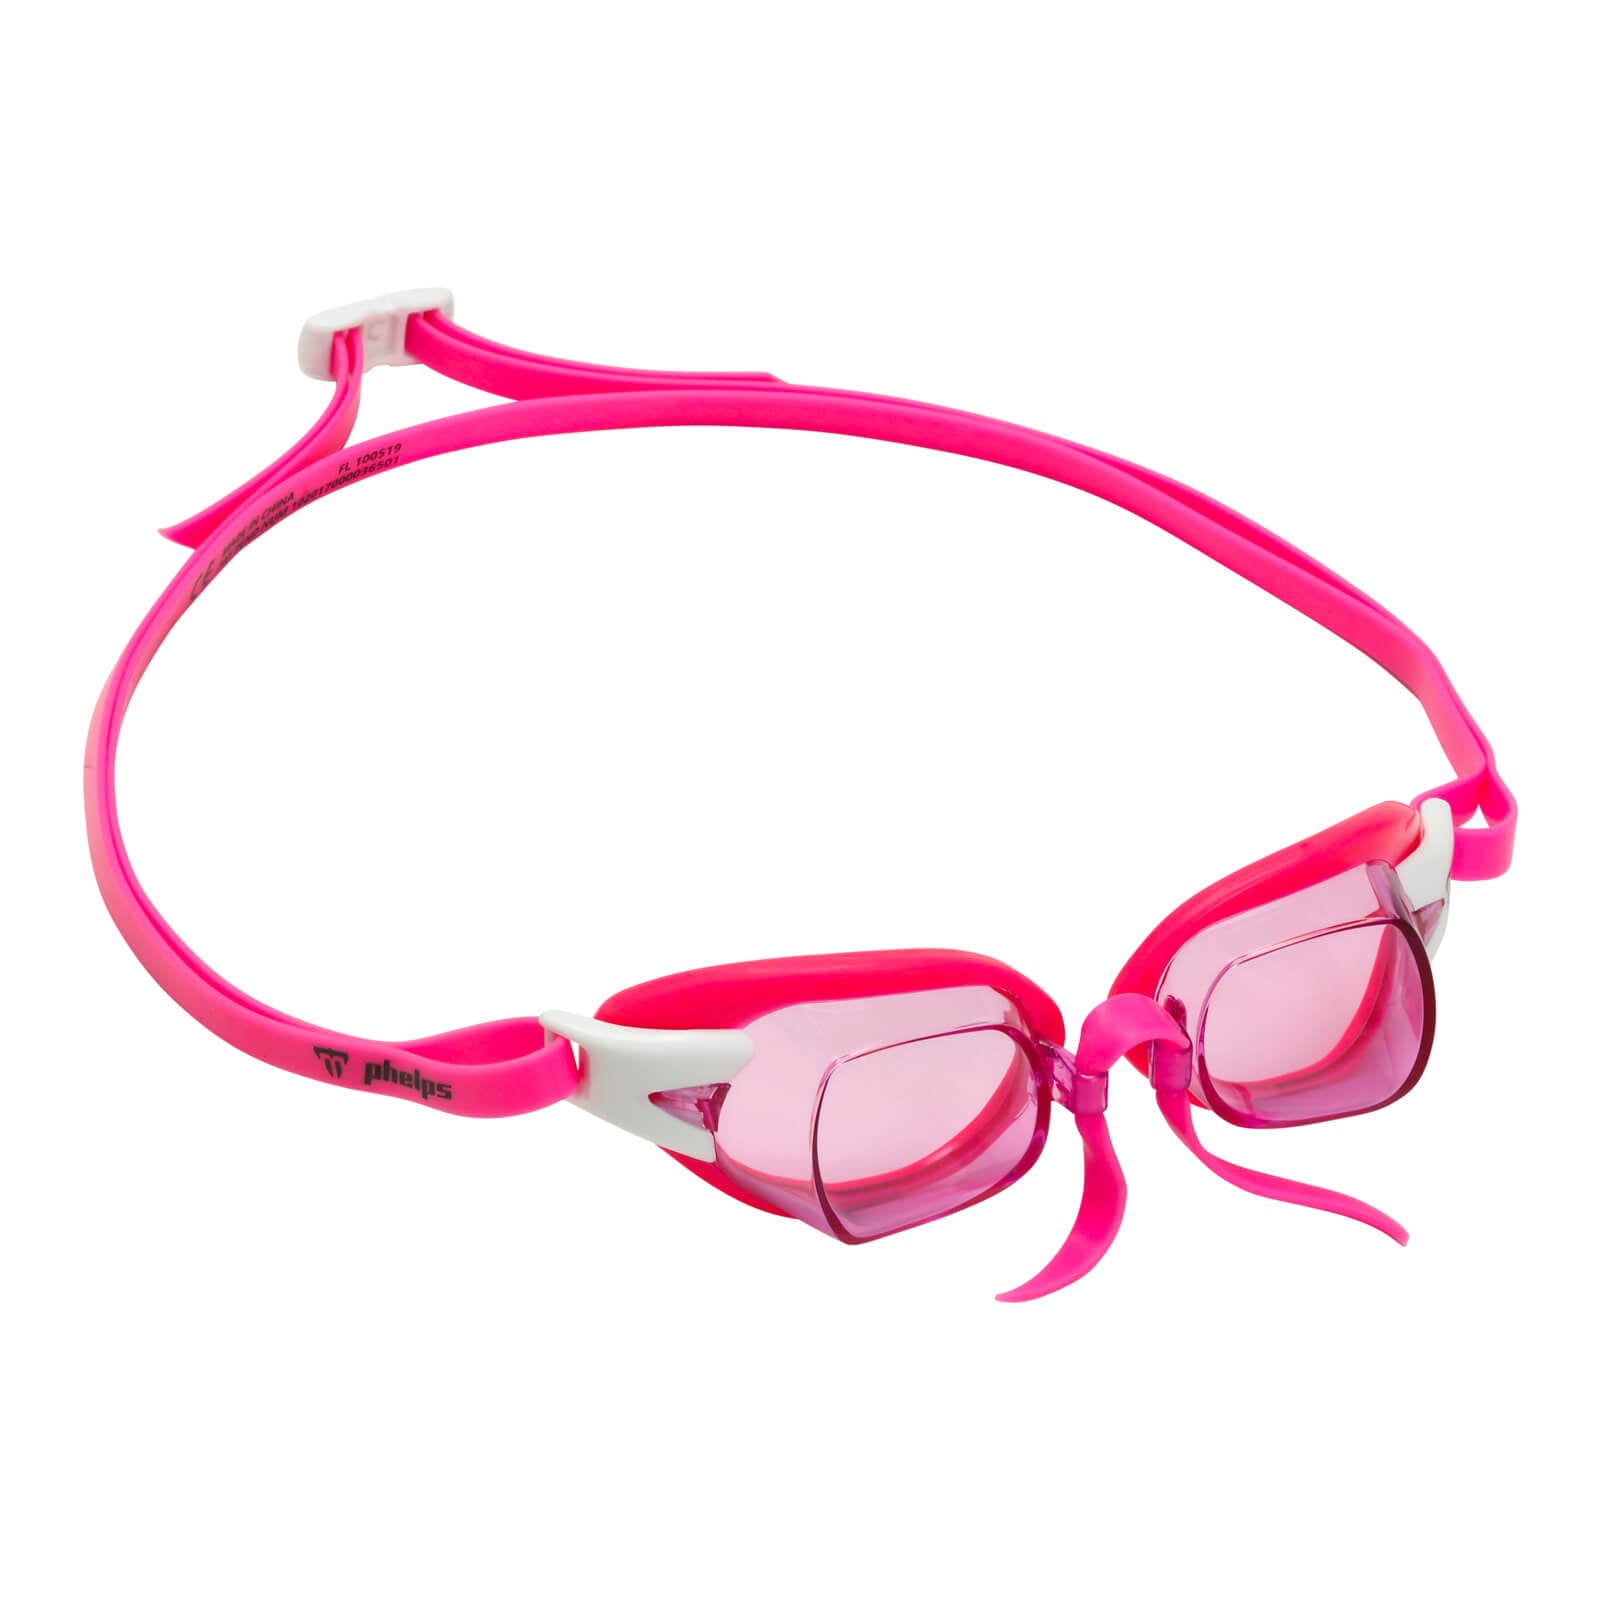 Phelps Chronos Men's Swimming Goggles Pink/White Pink